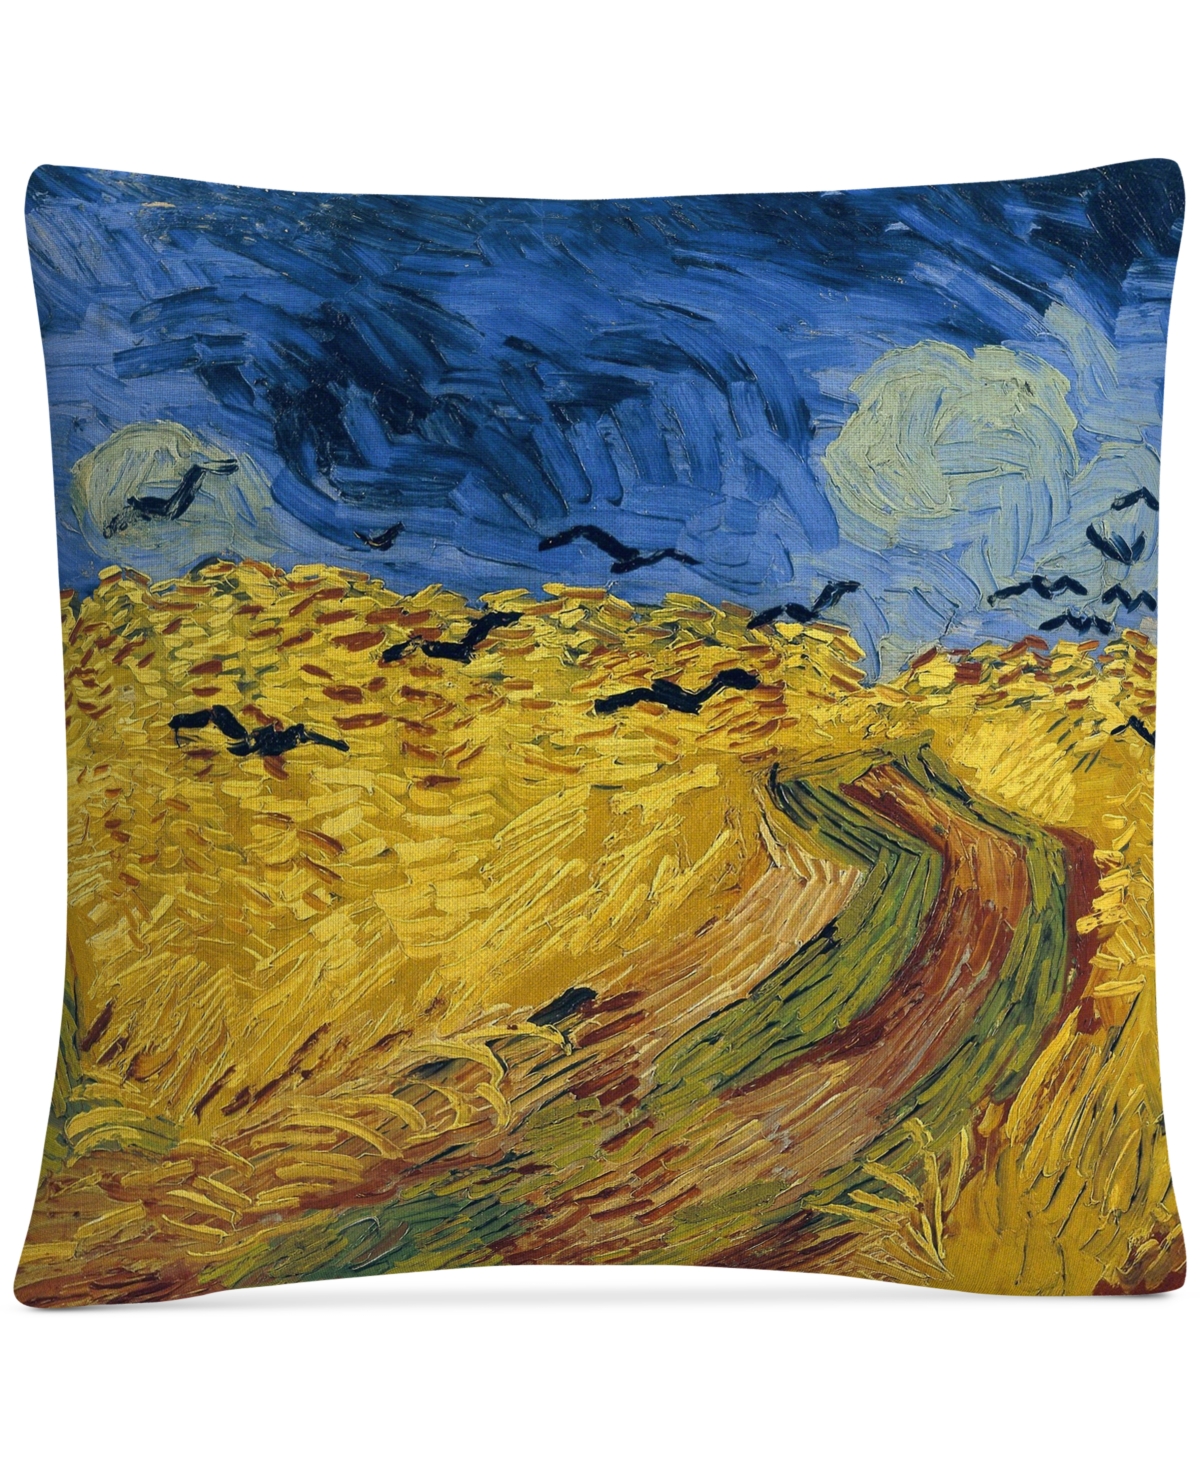 Vincent Van Gogh Wheatfield with Crows Decorative Pillow, 16 x 16